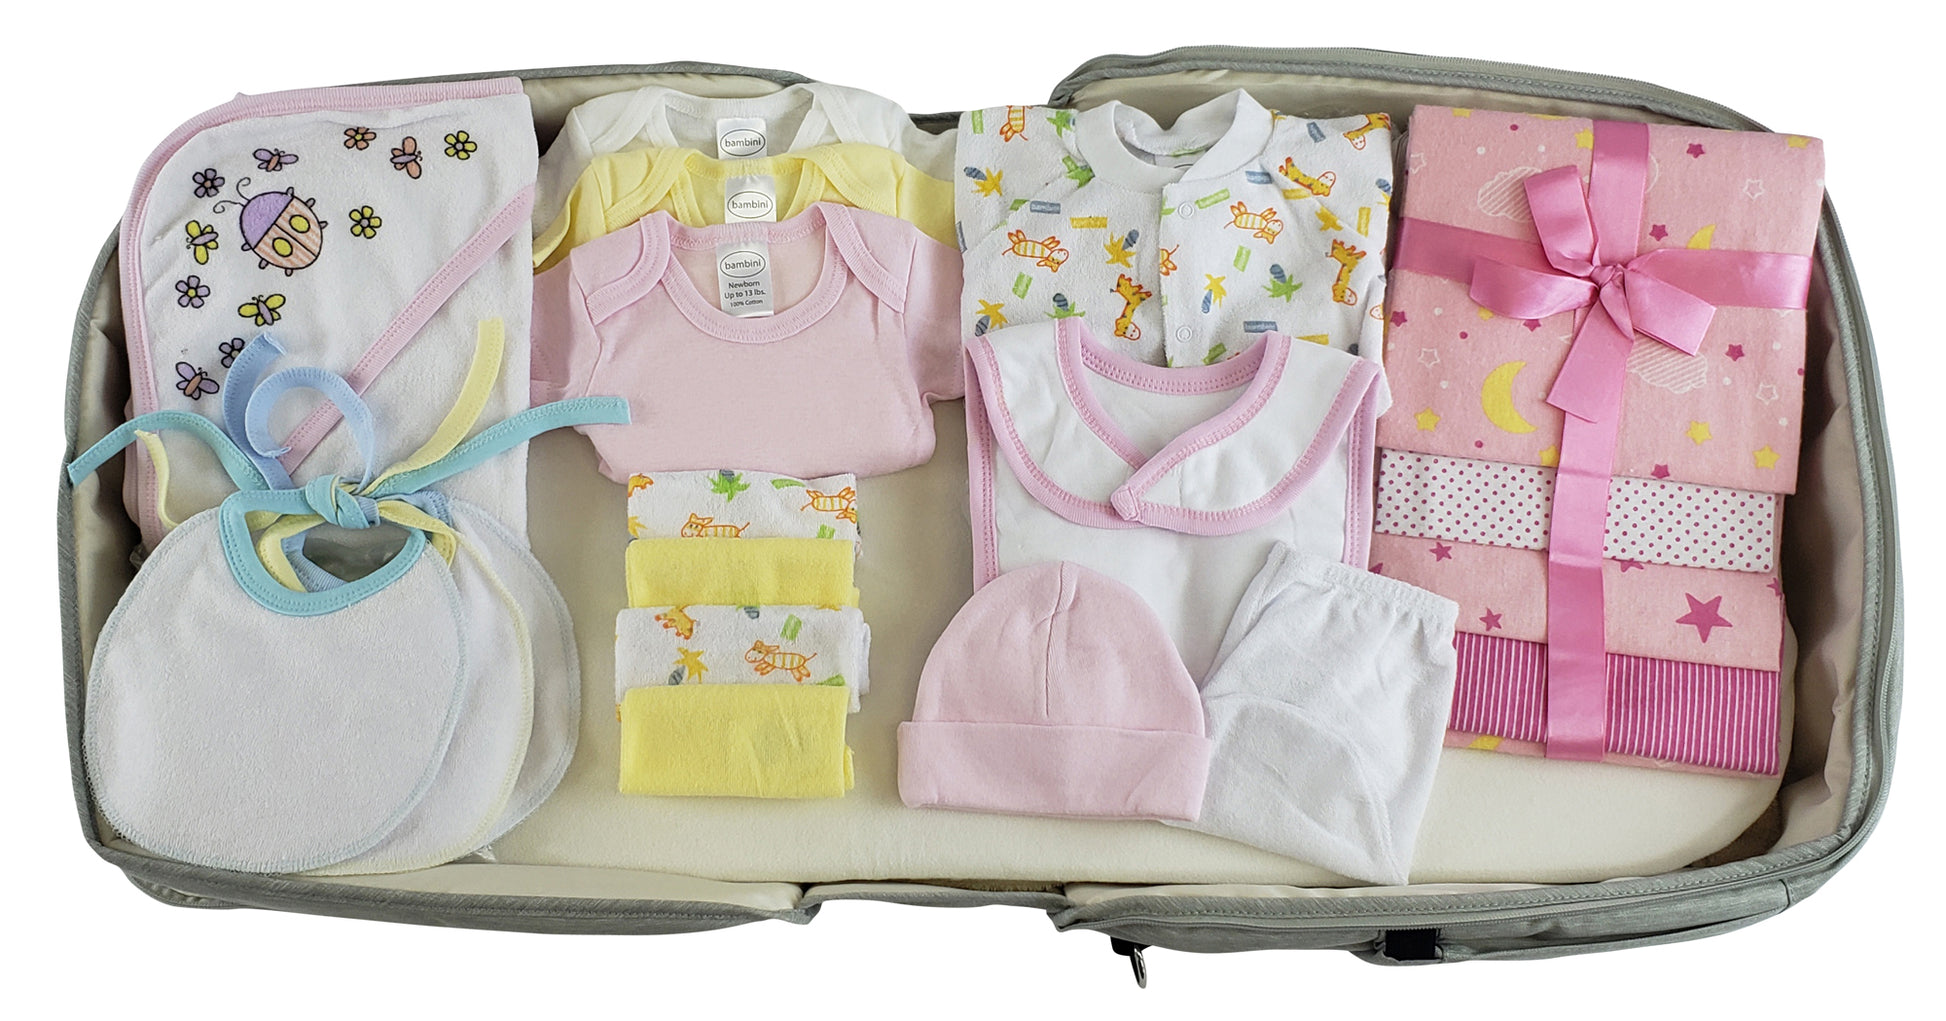 Girls 20 pc Baby Clothing Starter Set with Diaper Bag 808-20-Set